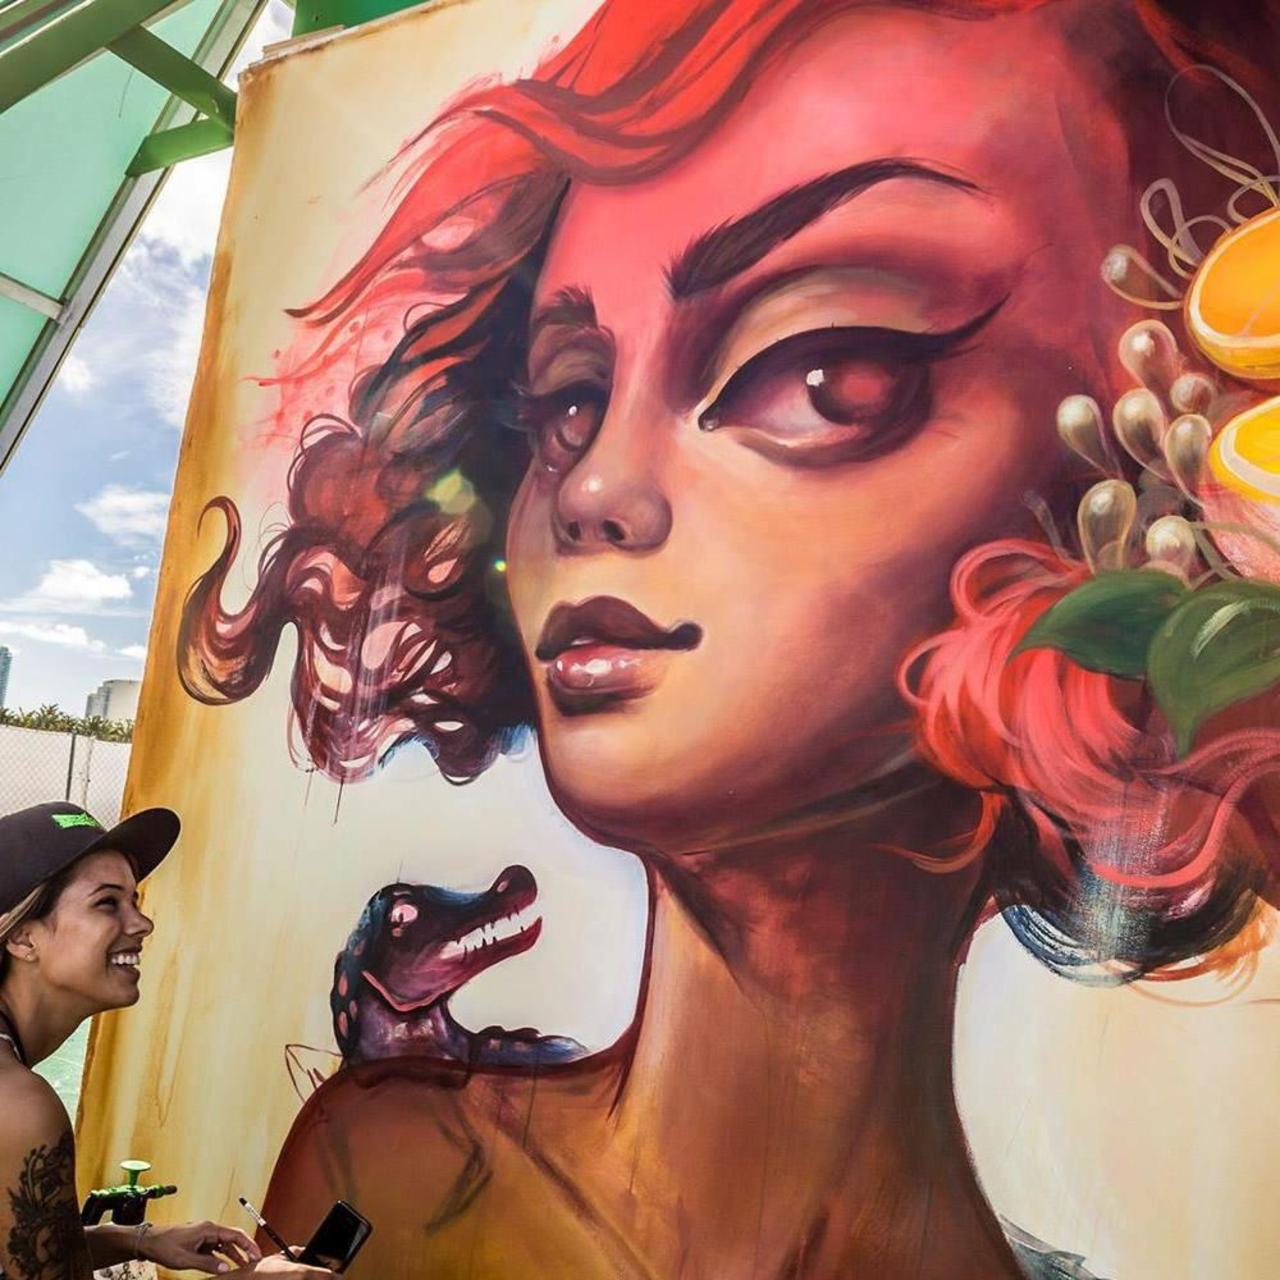 New tumblr post: "New tumblr post: "Street Art by Tati Suarez 

#art #graffiti #mural #streetart http://t.co/p1IaV343Mt" …